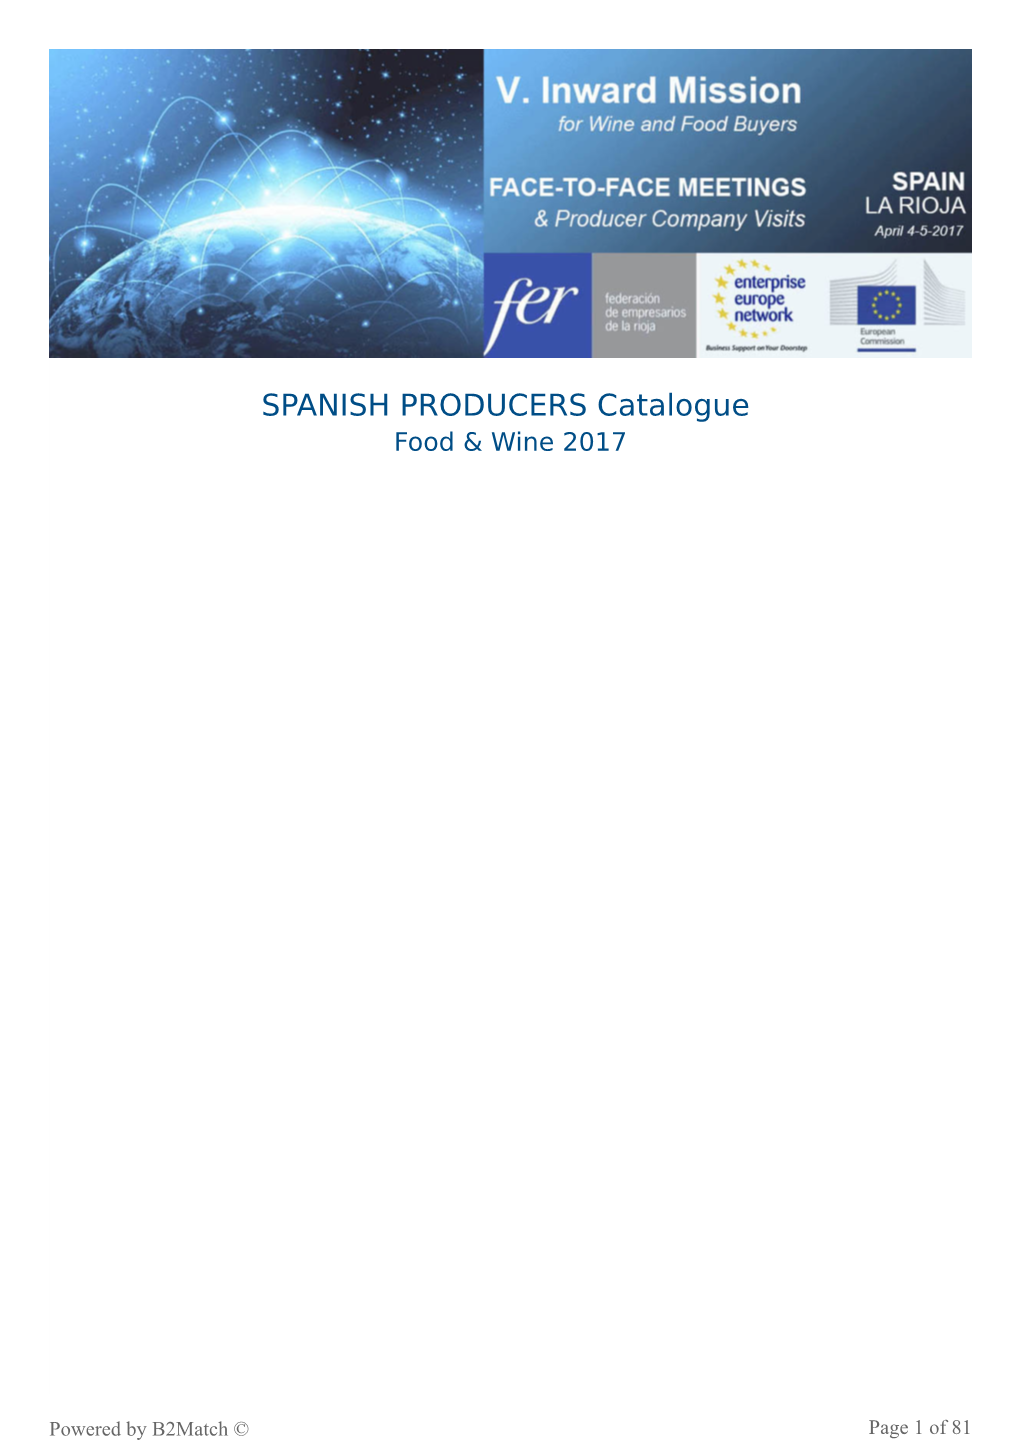 SPANISH PRODUCERS Catalogue Food & Wine 2017